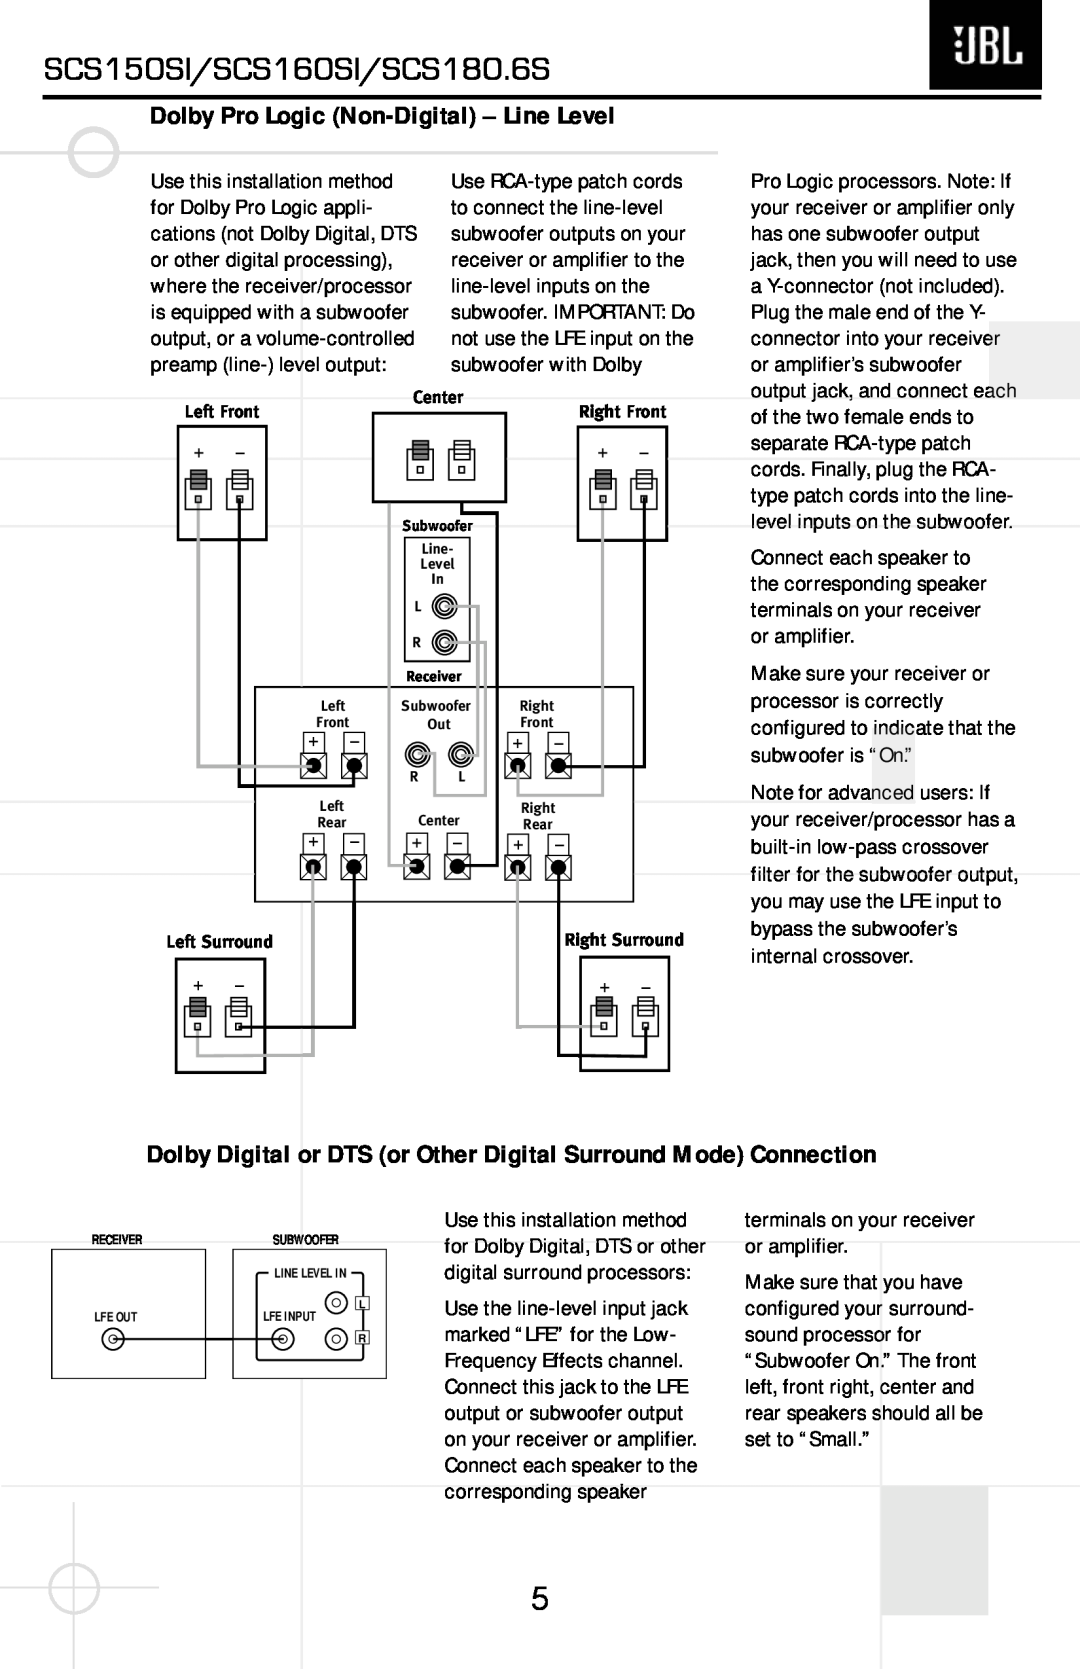 JBL service manual SCS150SI/SCS160SI/SCS180.6S, Dolby Pro Logic Non-Digital- Line Level 